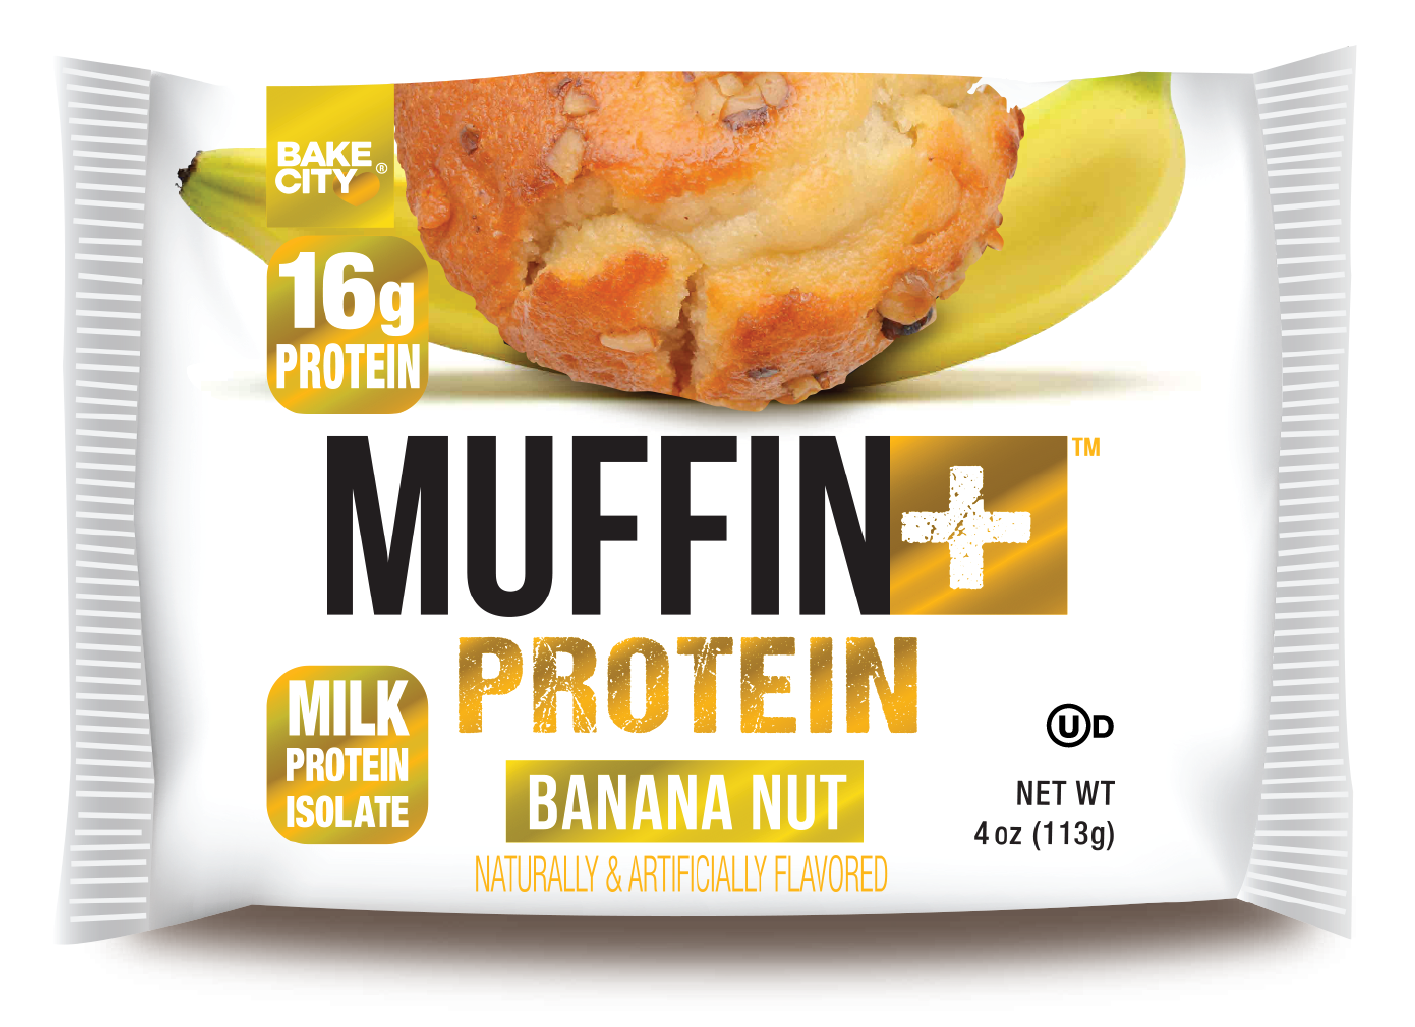 Muffin+ Protein Banana Nut - Cookie+ Protein